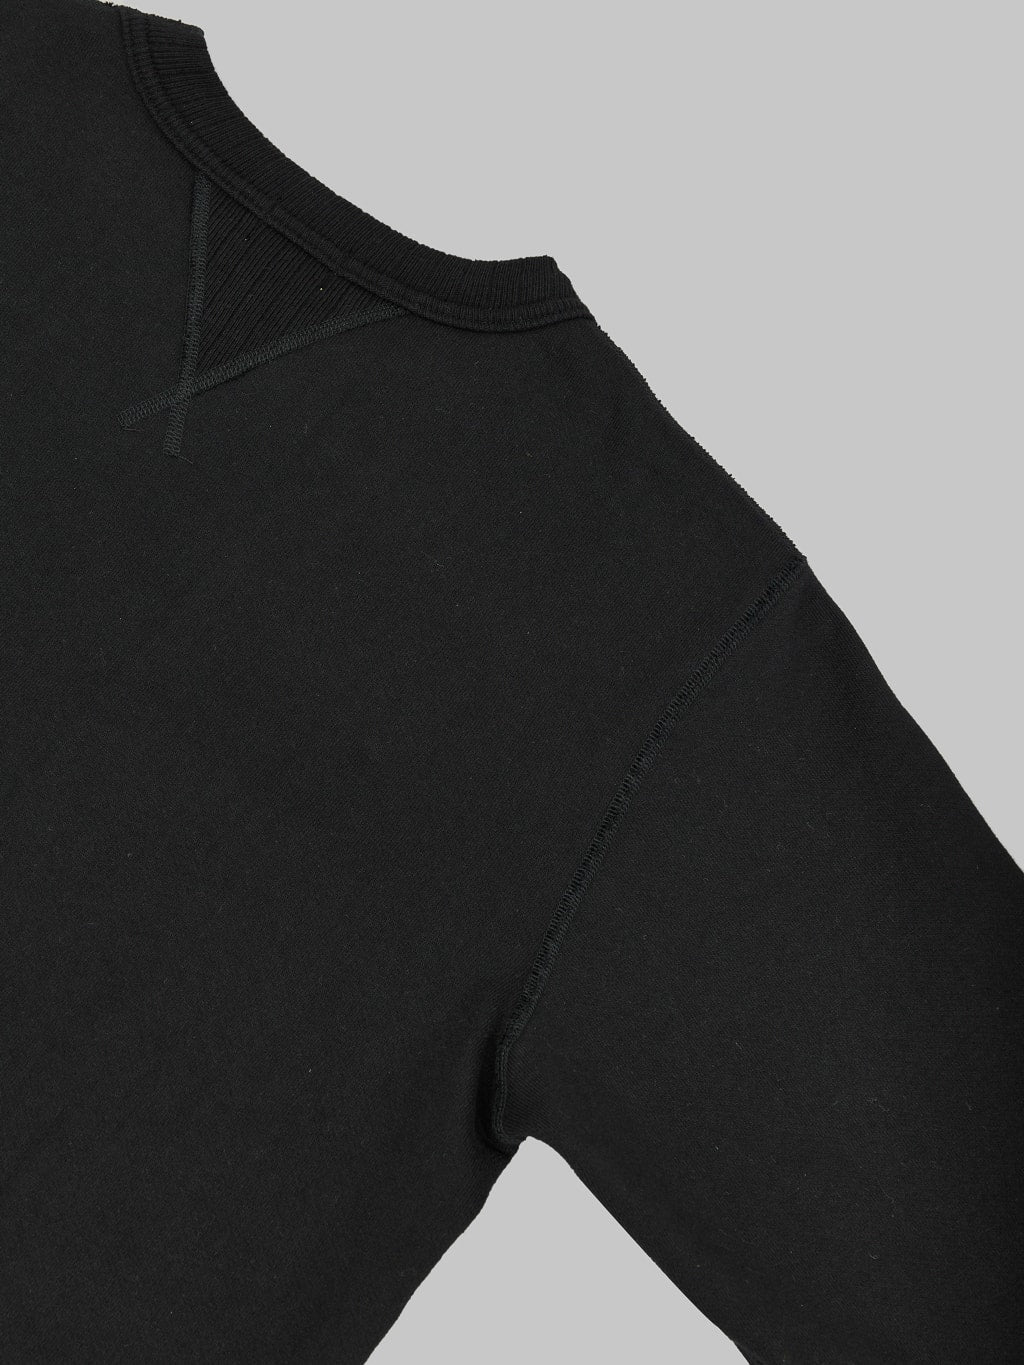 Whitesville cotton Loopwheel Sweatshirt Black no side seams